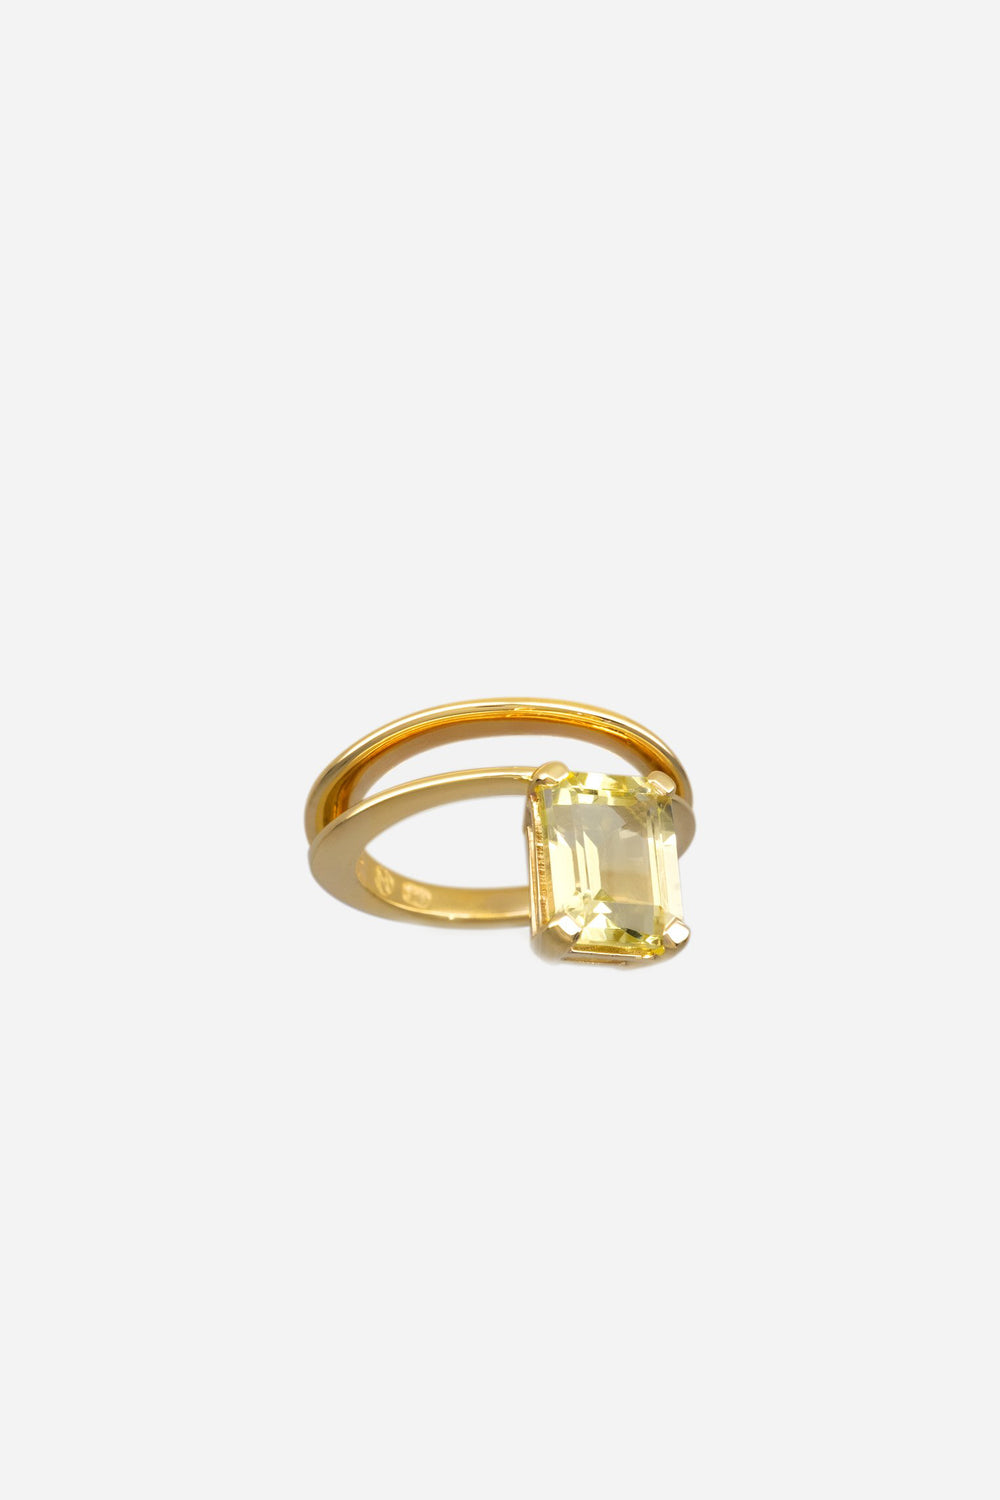 Double Band Lemon Quartz Ring | 9K Yellow Gold| Natasha Schweitzer